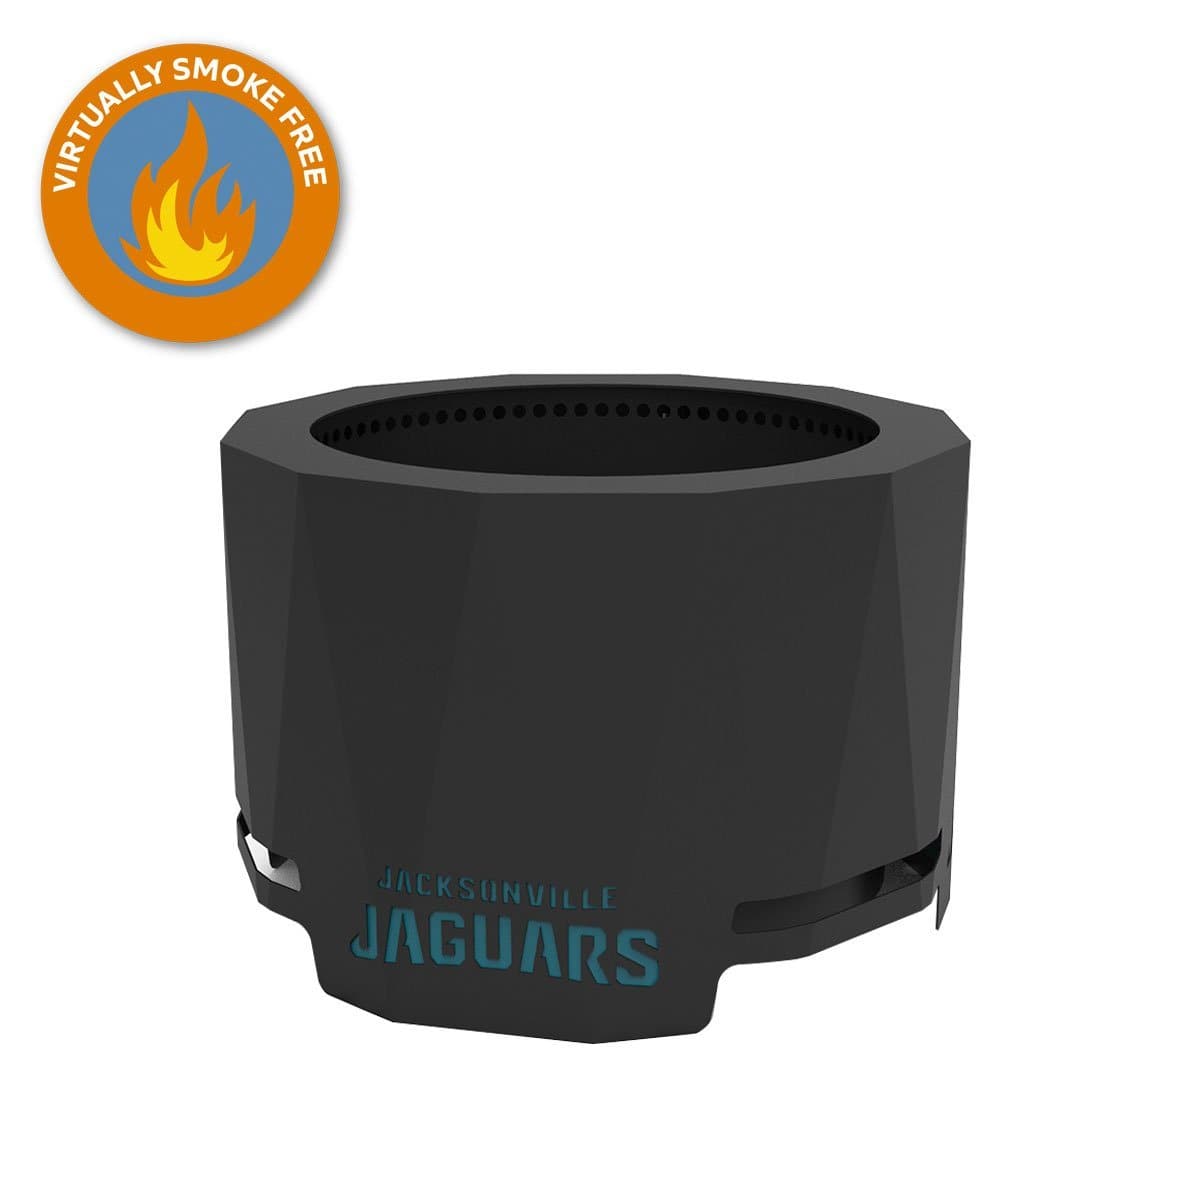 Blue Sky Outdoor Fire Pits - NFL Licensed Jacksonville Jaguars - Senior.com Fire Pits